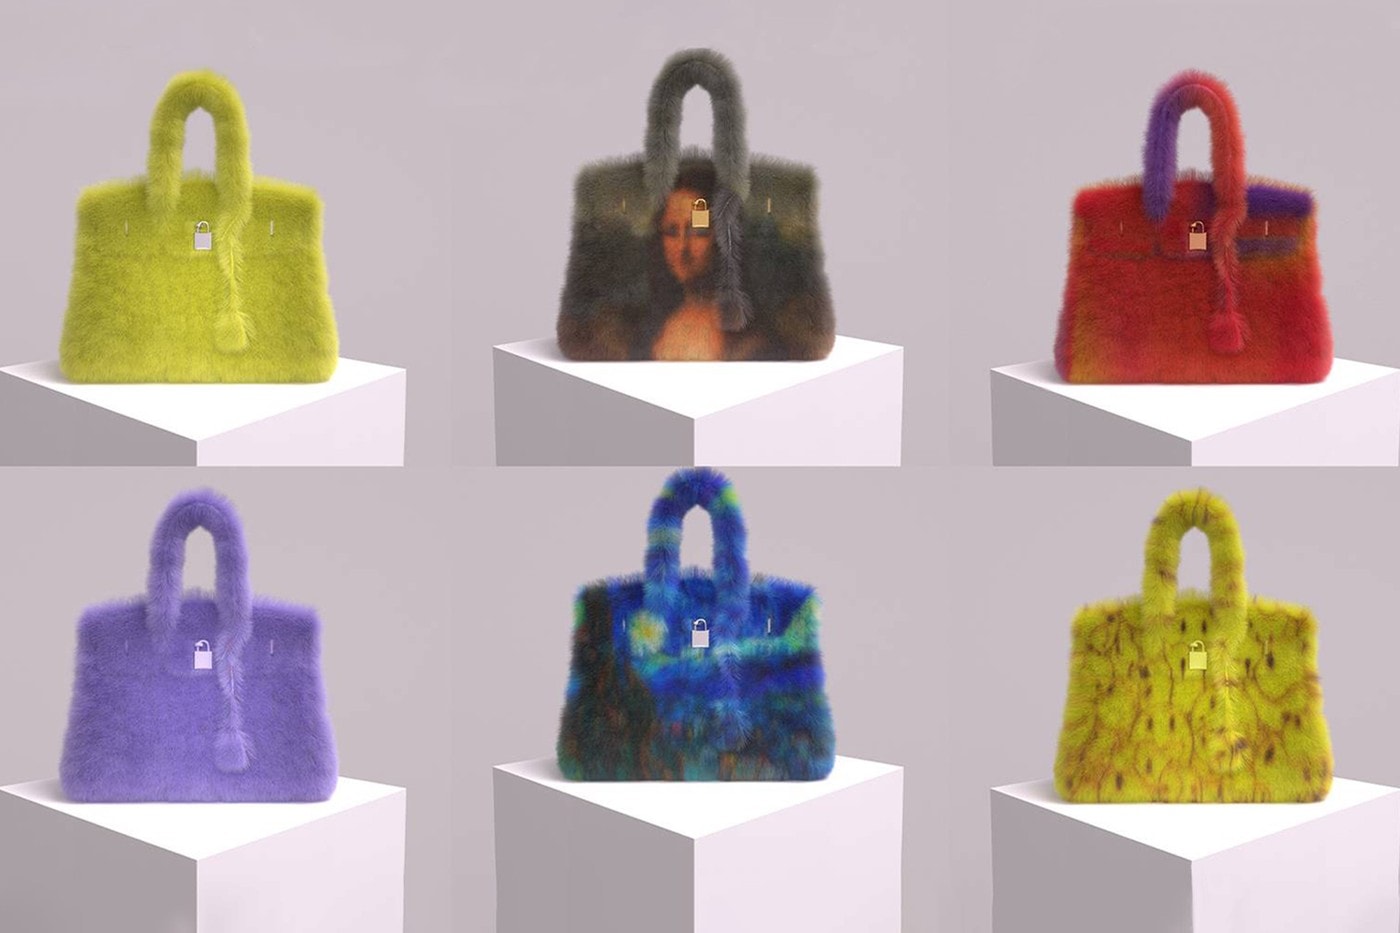 mason rothschild metabirkins nft metaverse handbags hermes fashion debate